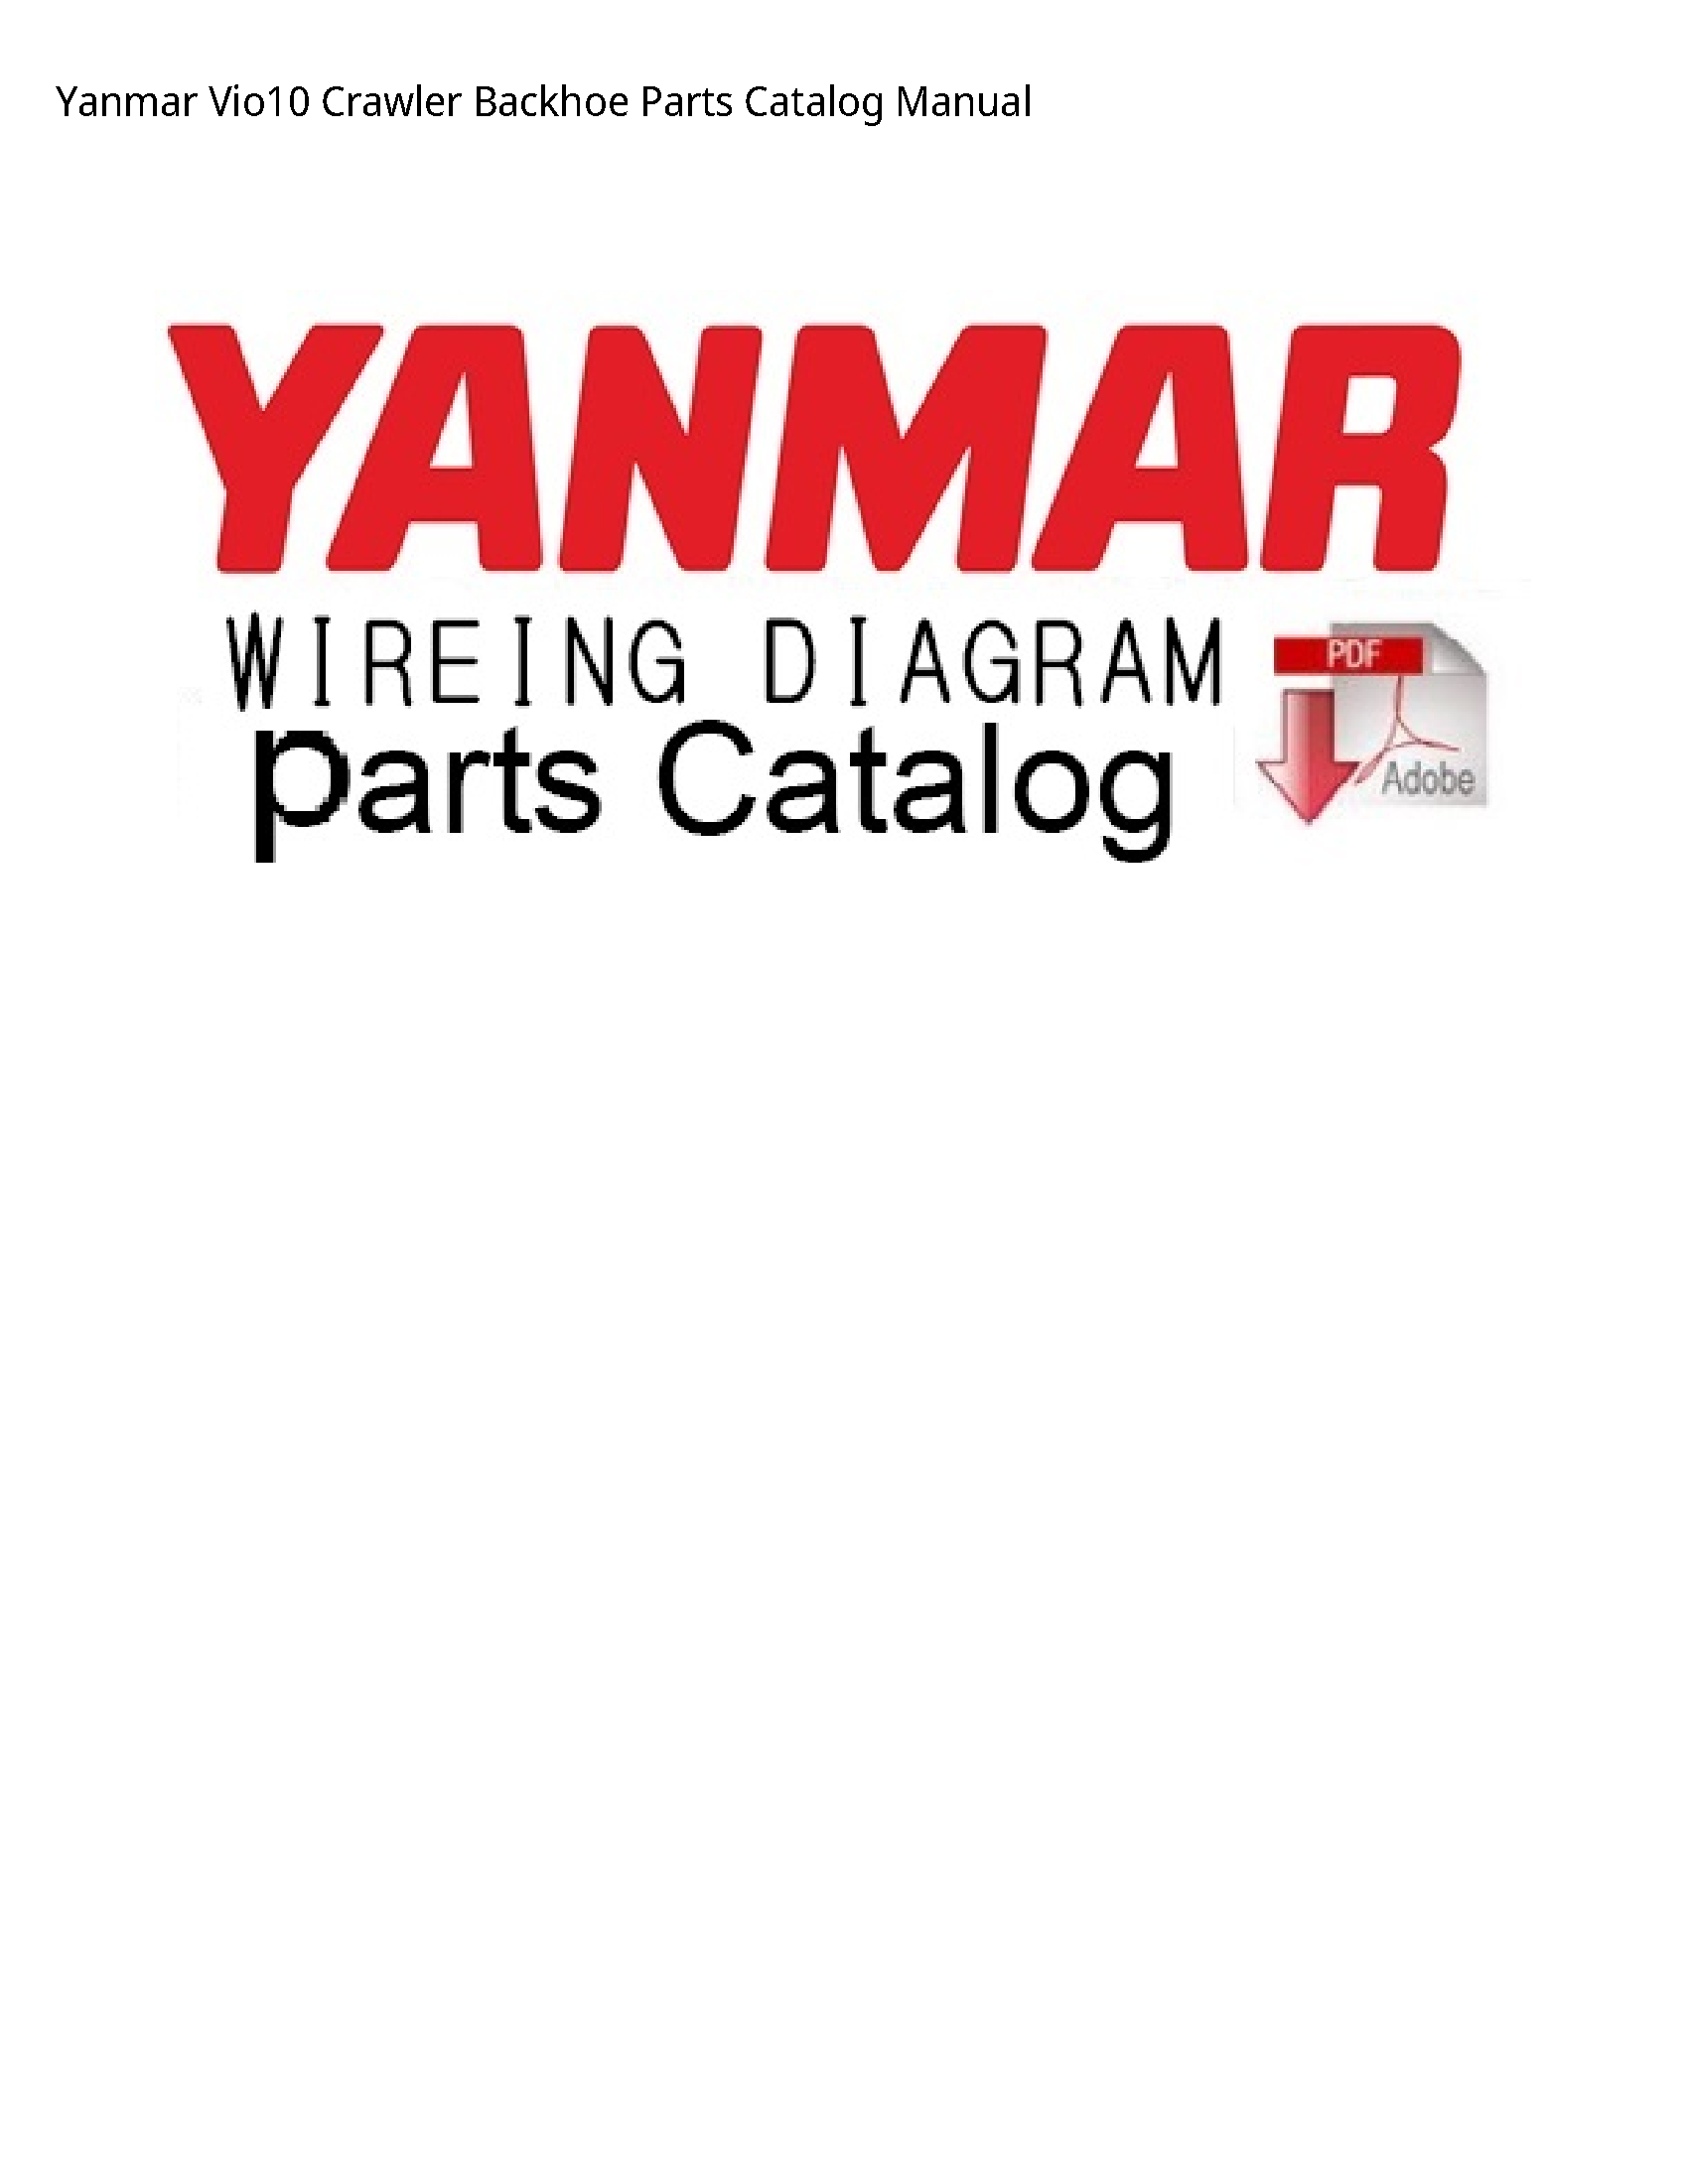 Yanmar Vio10 Crawler Backhoe Parts Catalog manual